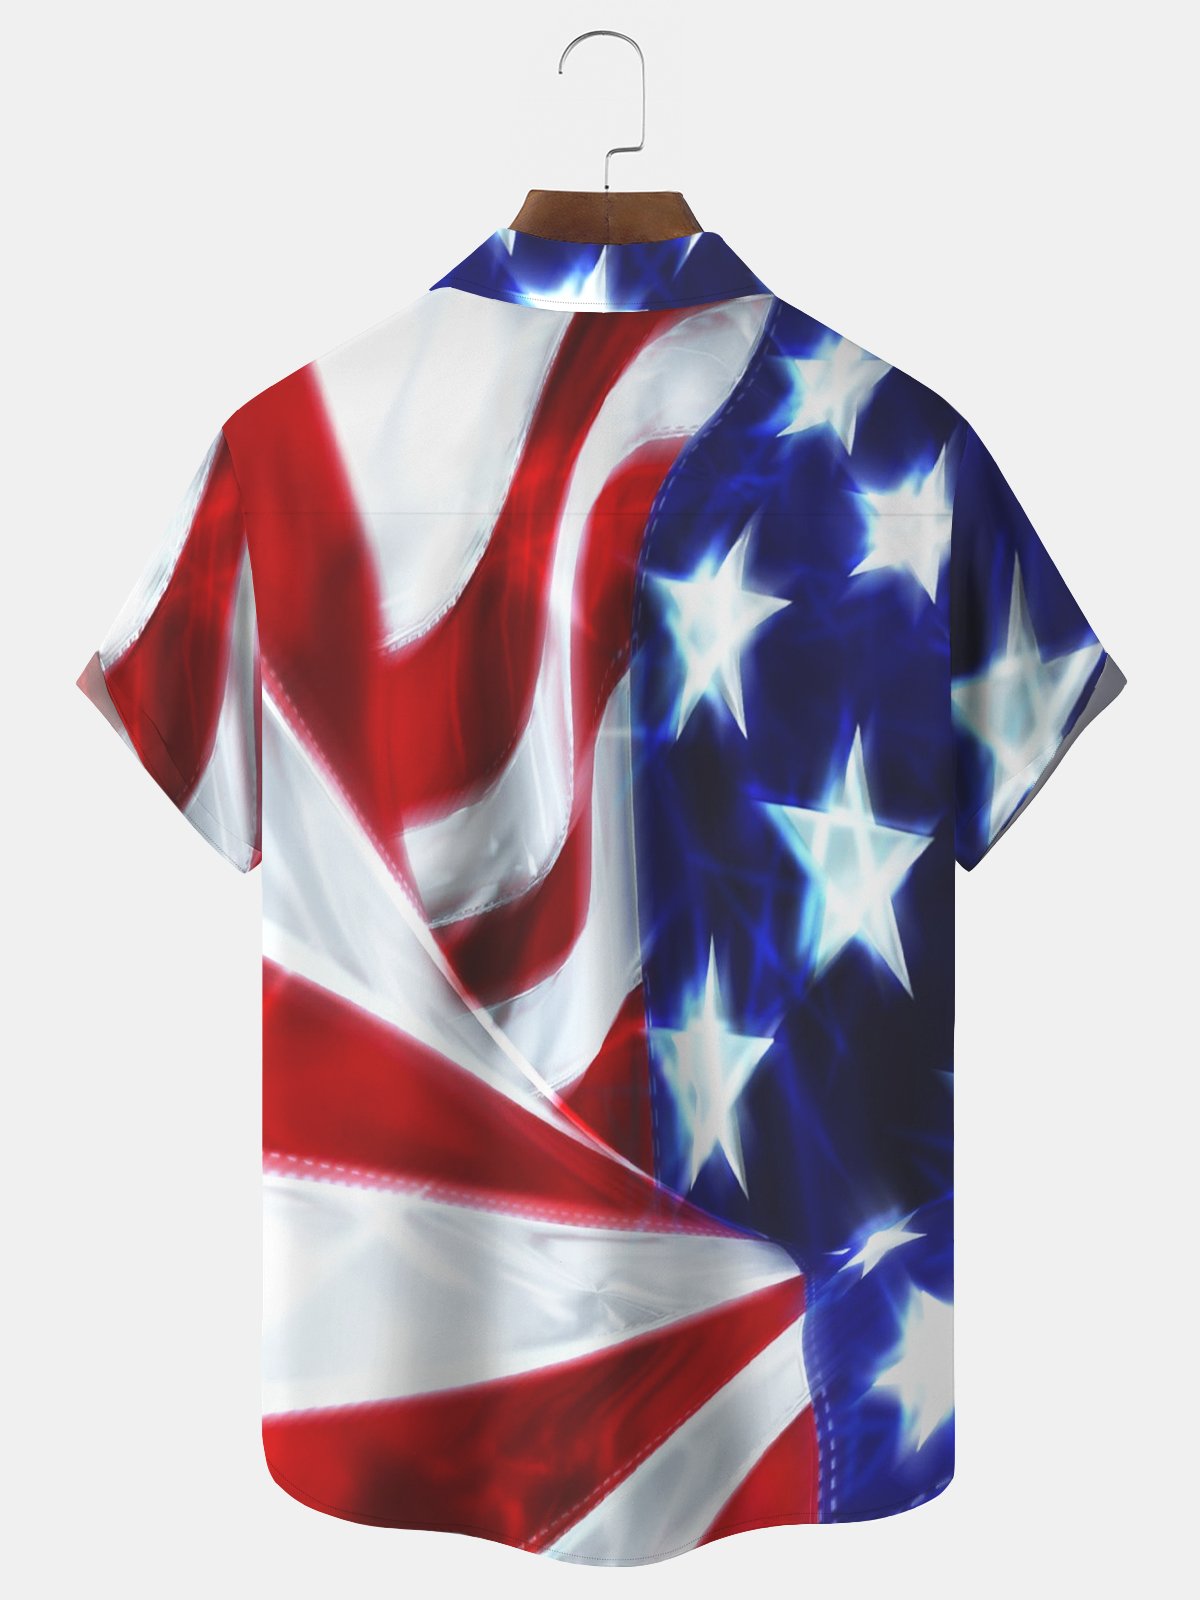 Royaura Independence Day Dinosaur American Flag Print Hawaii Shirt Stars Stripes 4th July Button Up Shirt